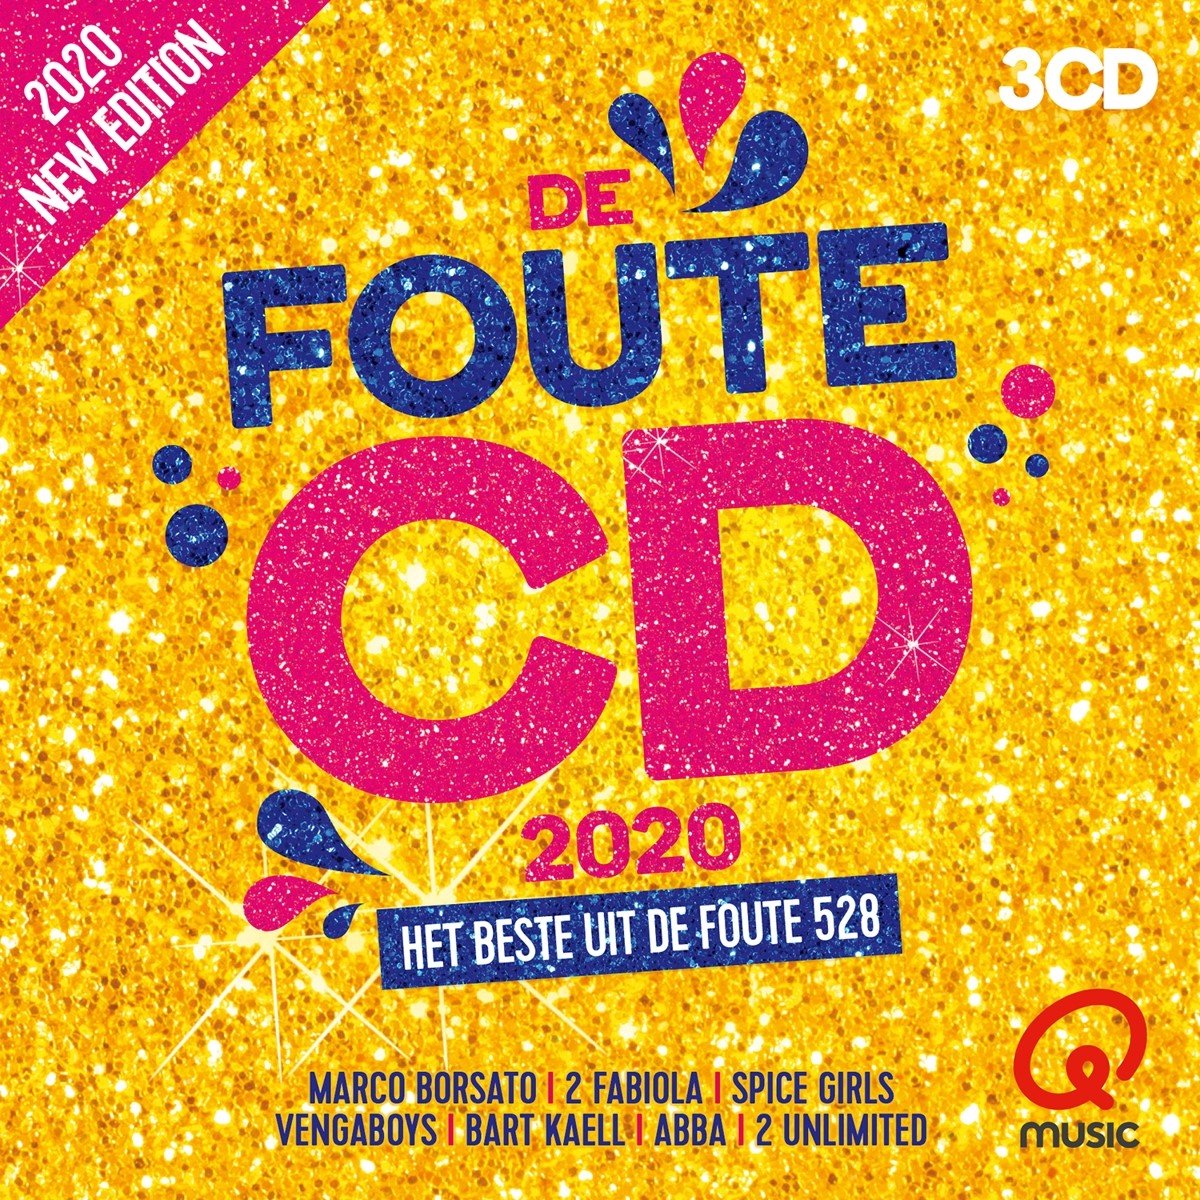 De Foute CD Van Qmusic (2020) - various artists